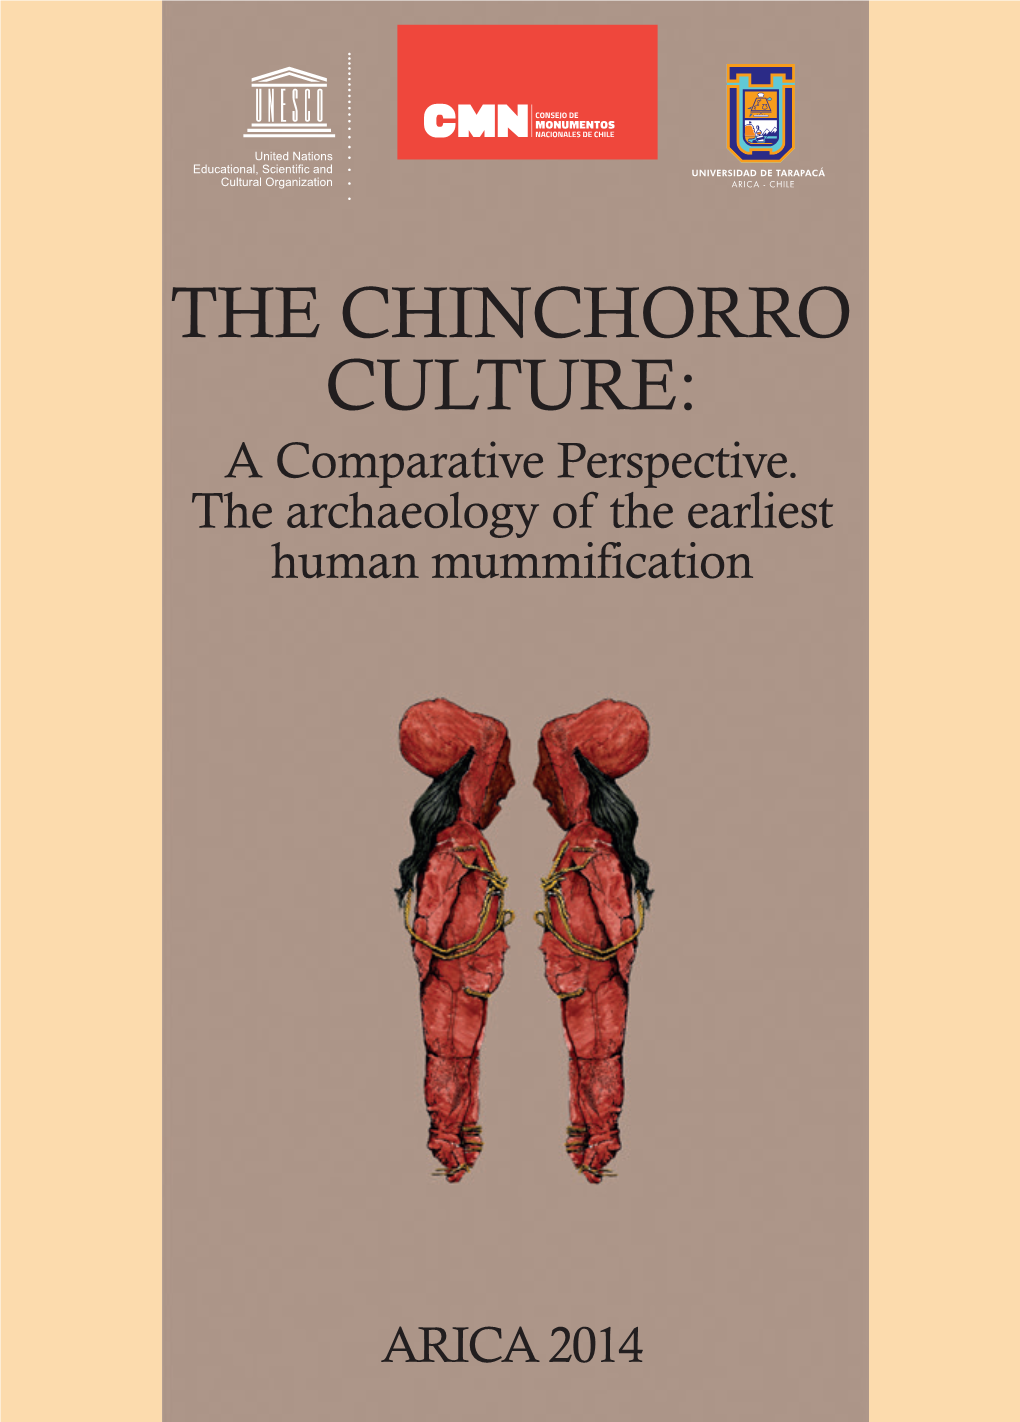 The Chinchorro Culture: the Chinchorro Human Mummification